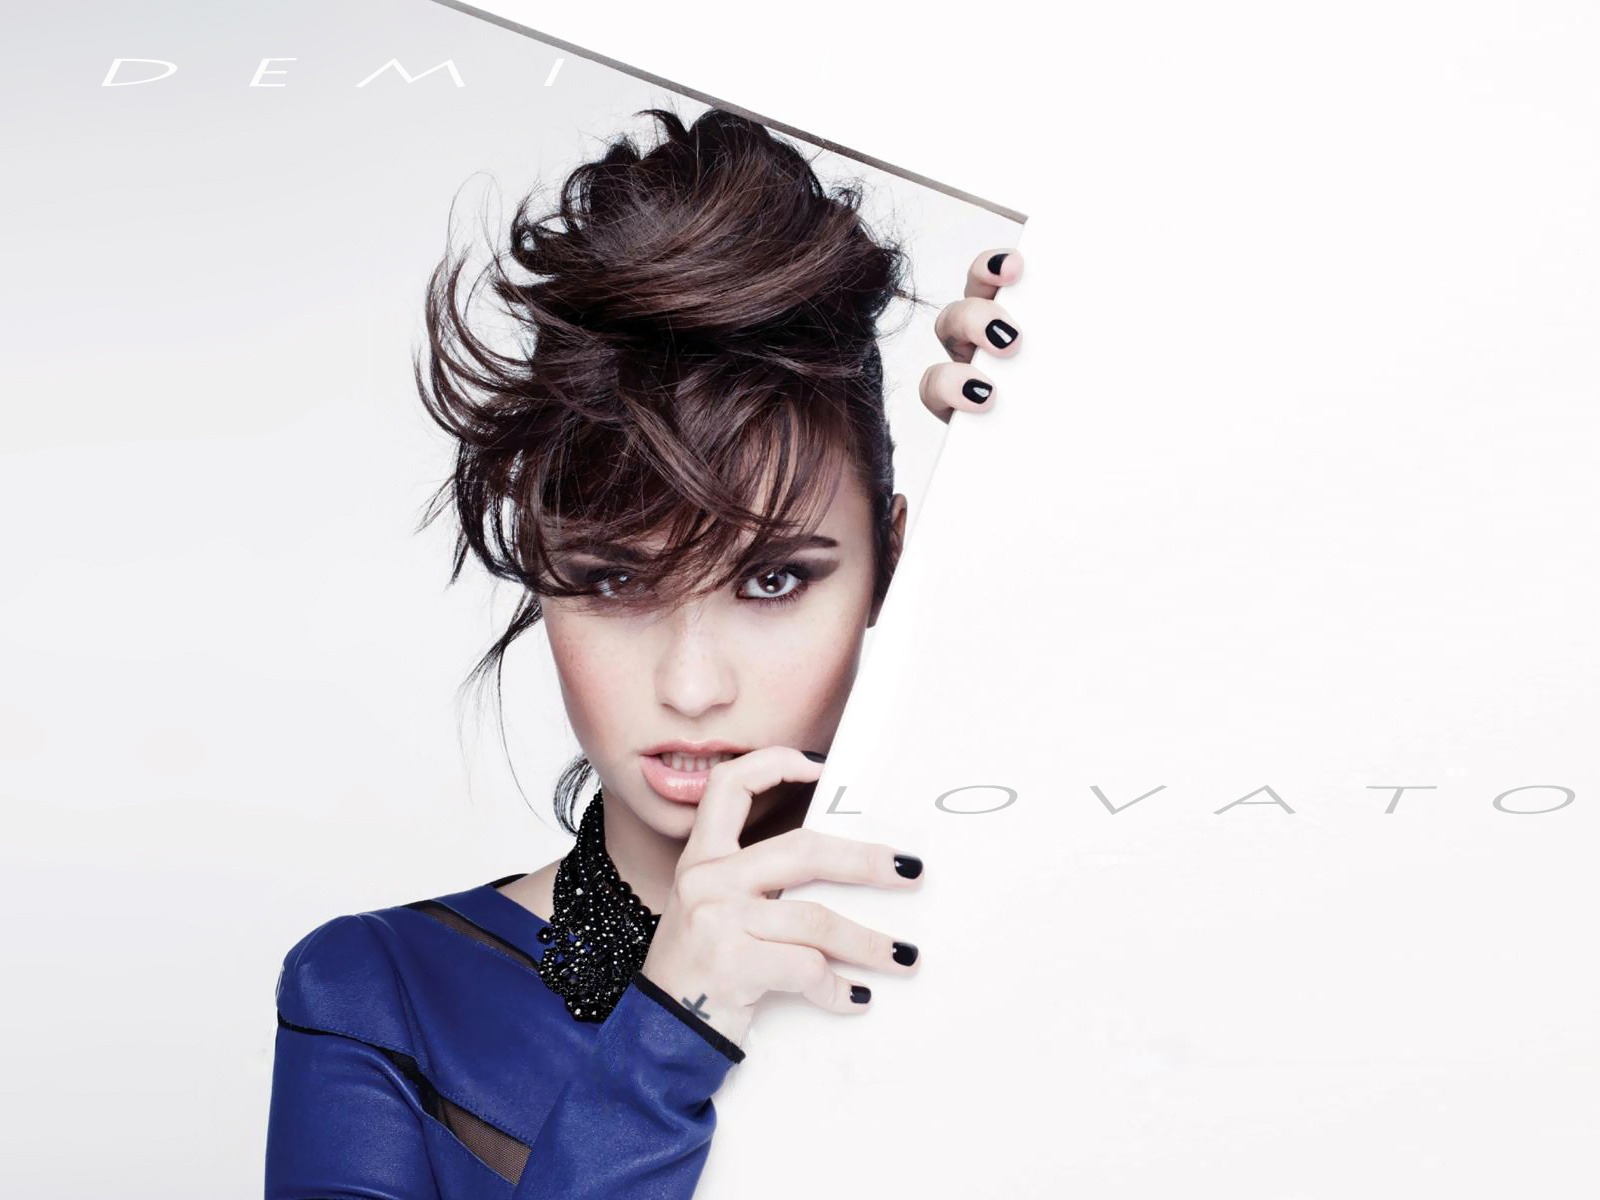 Superb Demi Lovato for 1600 x 1200 resolution